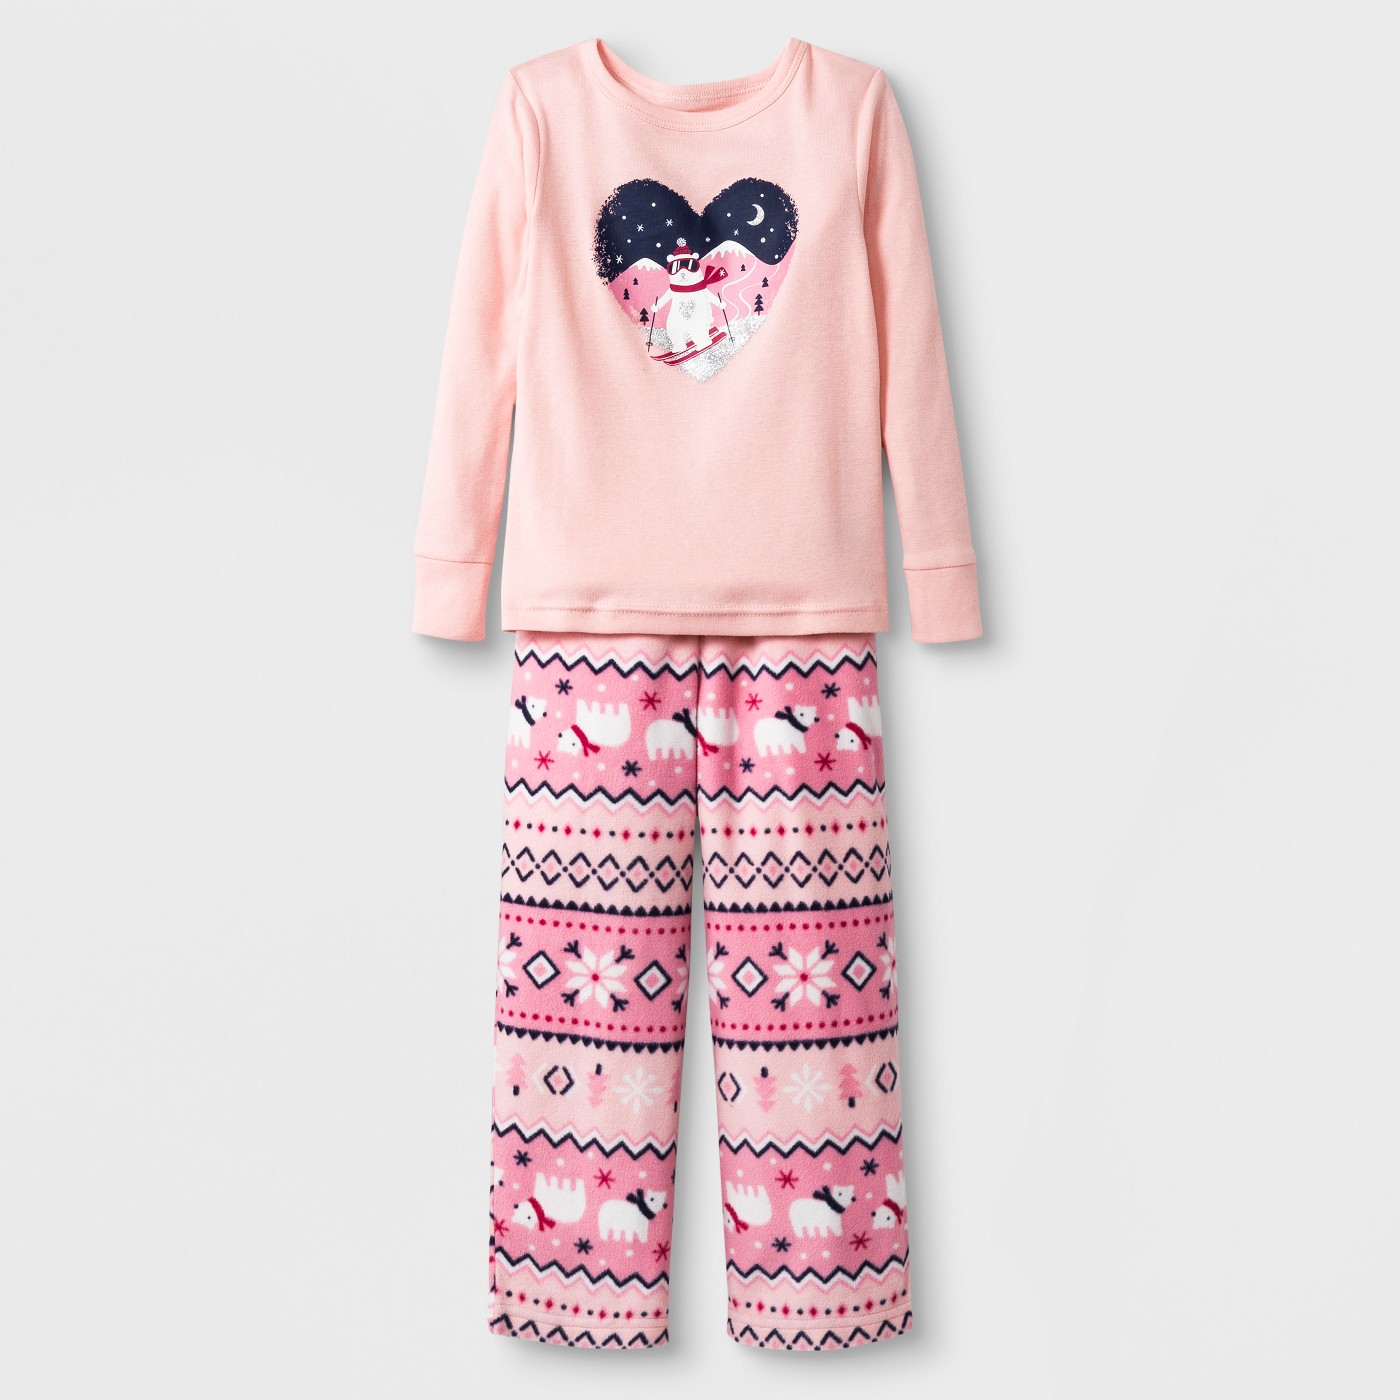 Toddlers' 2pc Bear Pajama Set - Cat & Jackâ¢ Pink - image 1 of 1